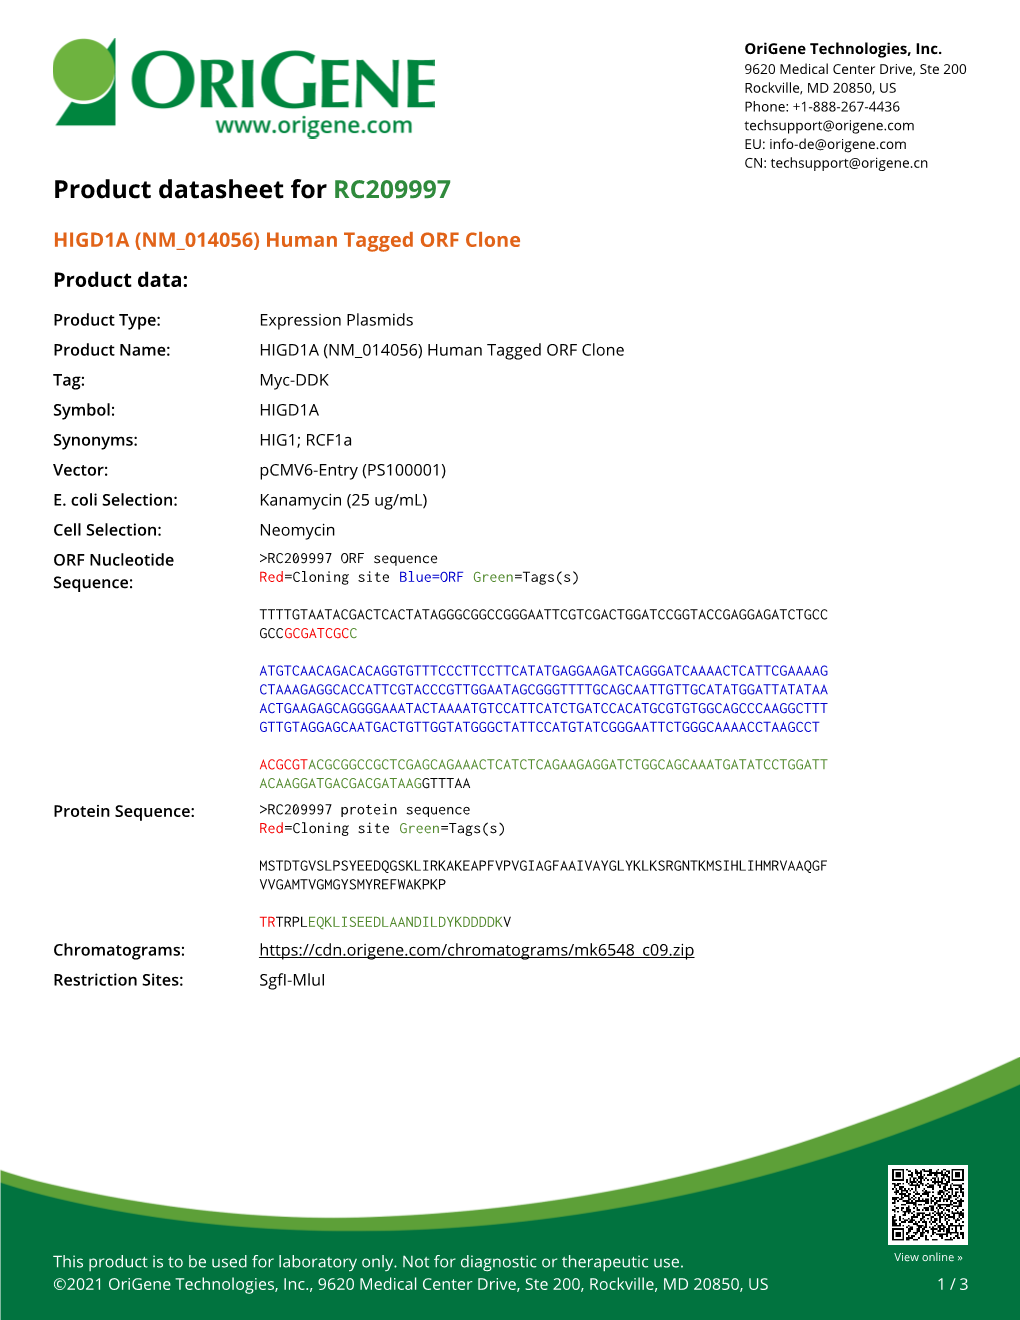 HIGD1A (NM 014056) Human Tagged ORF Clone – RC209997